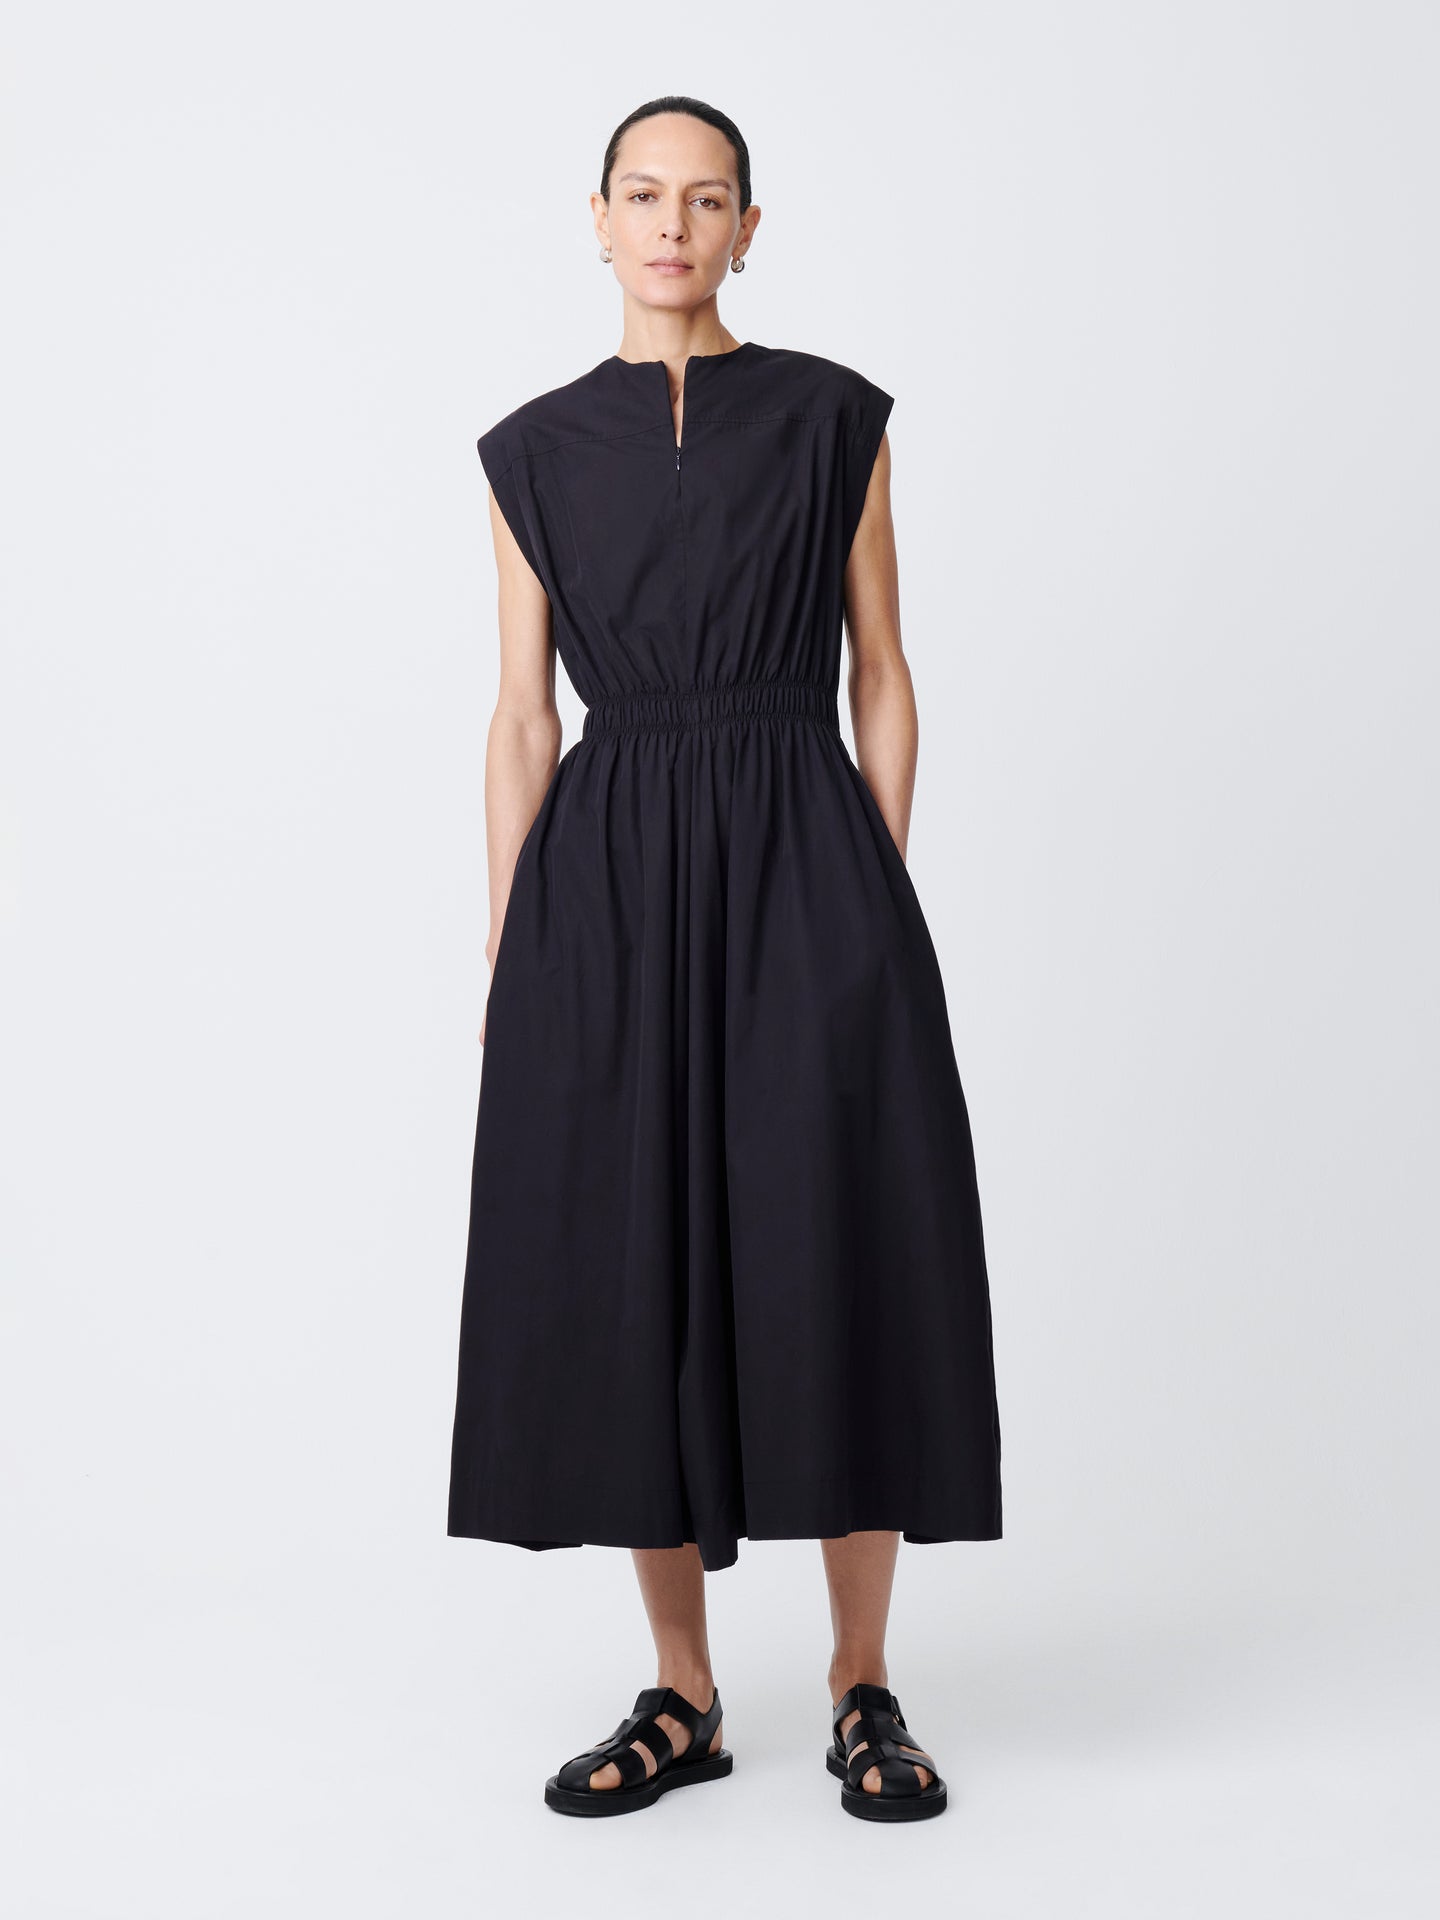 New Arrivals For Women | Modular Wardrobe Clothing– Studio Nicholson